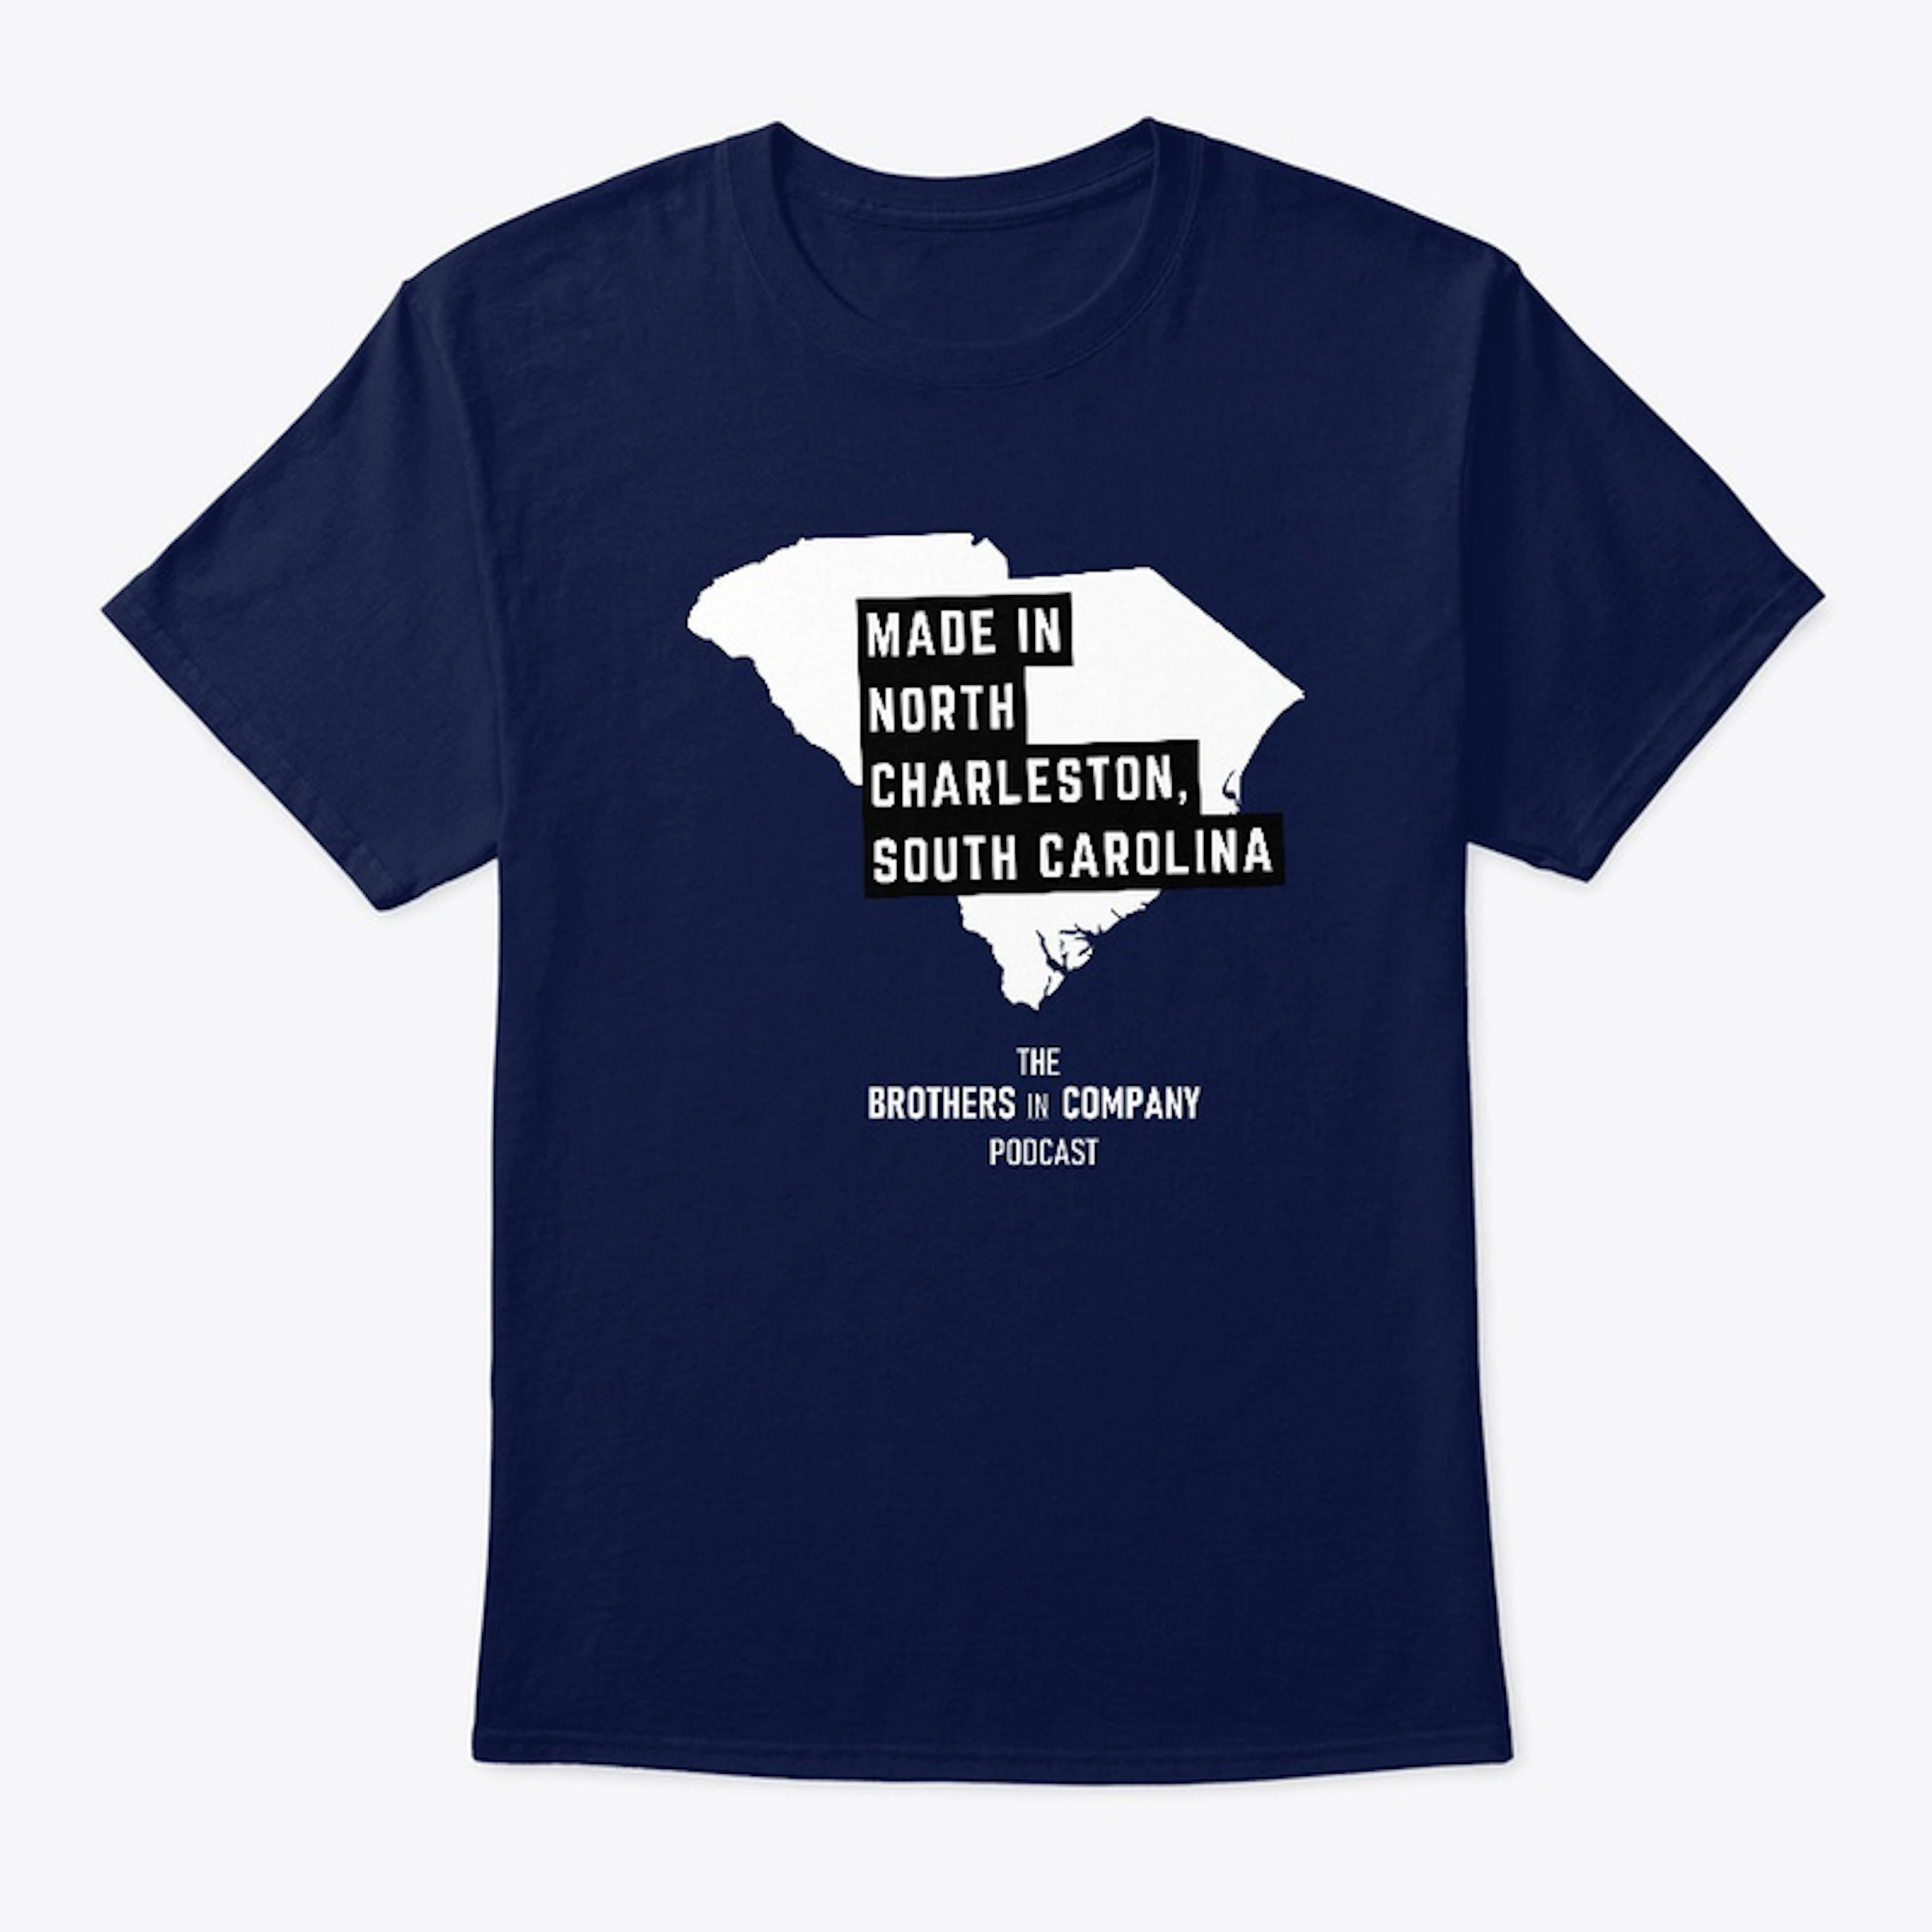 "Made in North Charleston" t-shirt